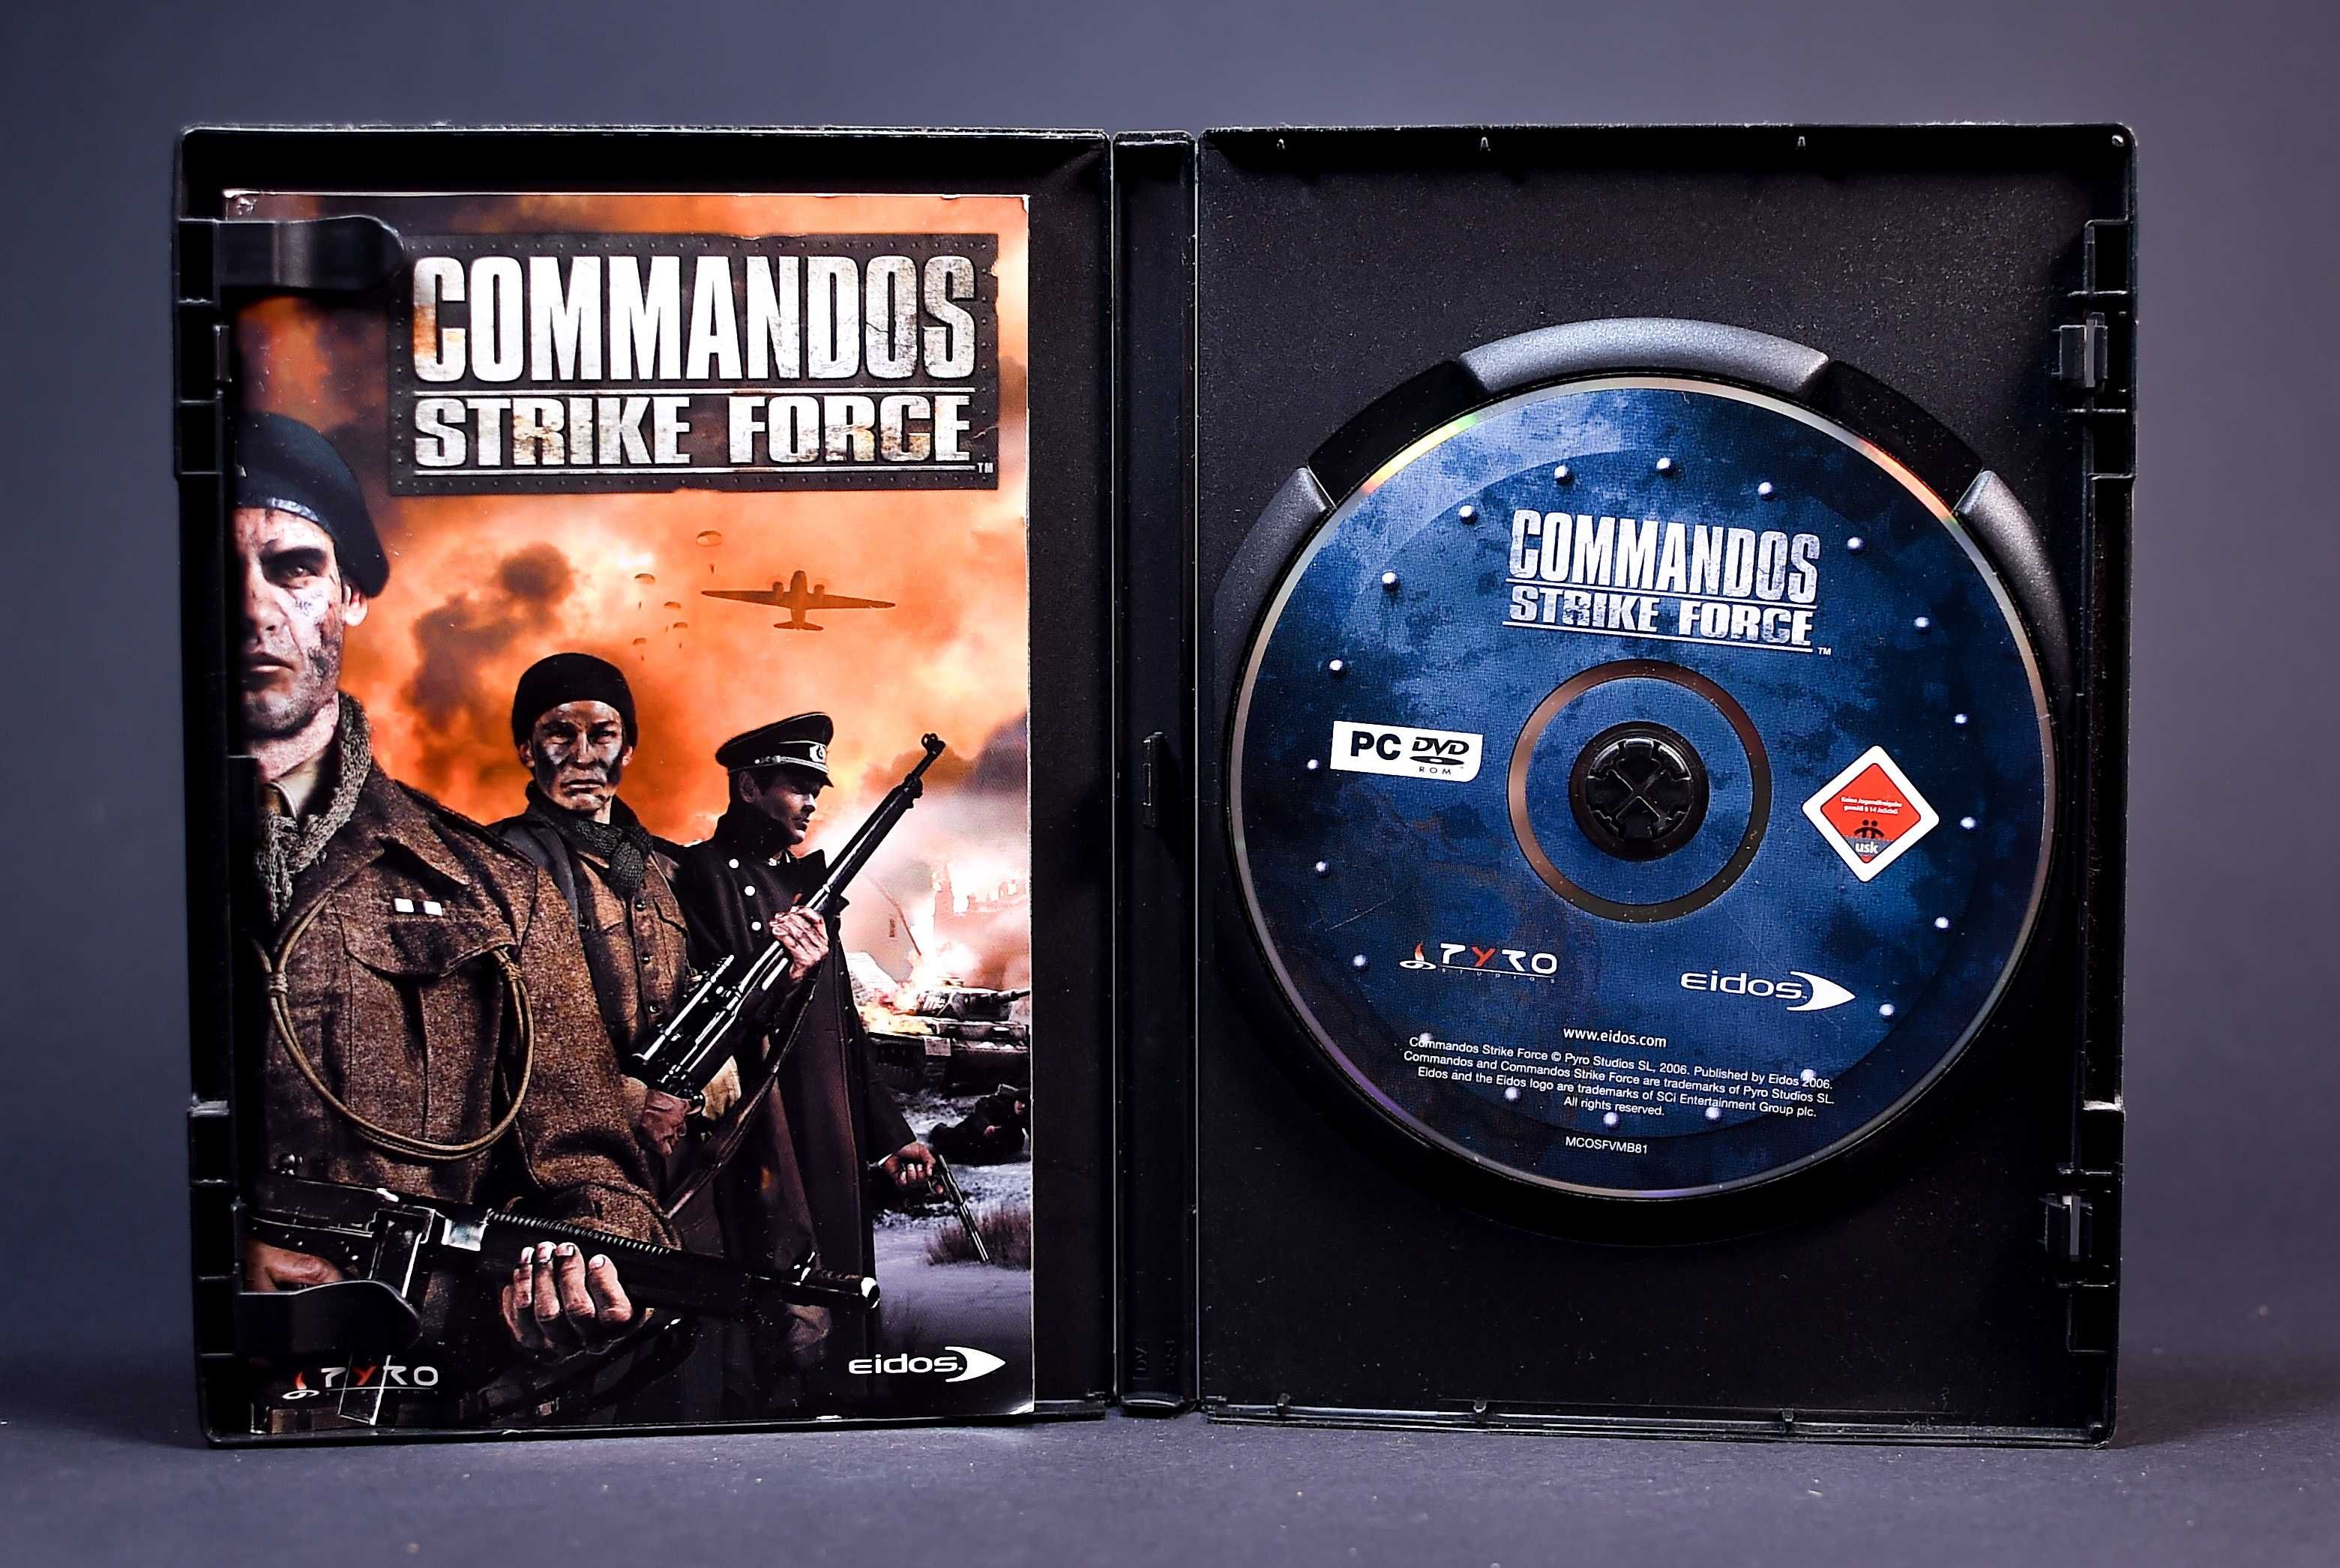 (PC) Commandos Strike Force